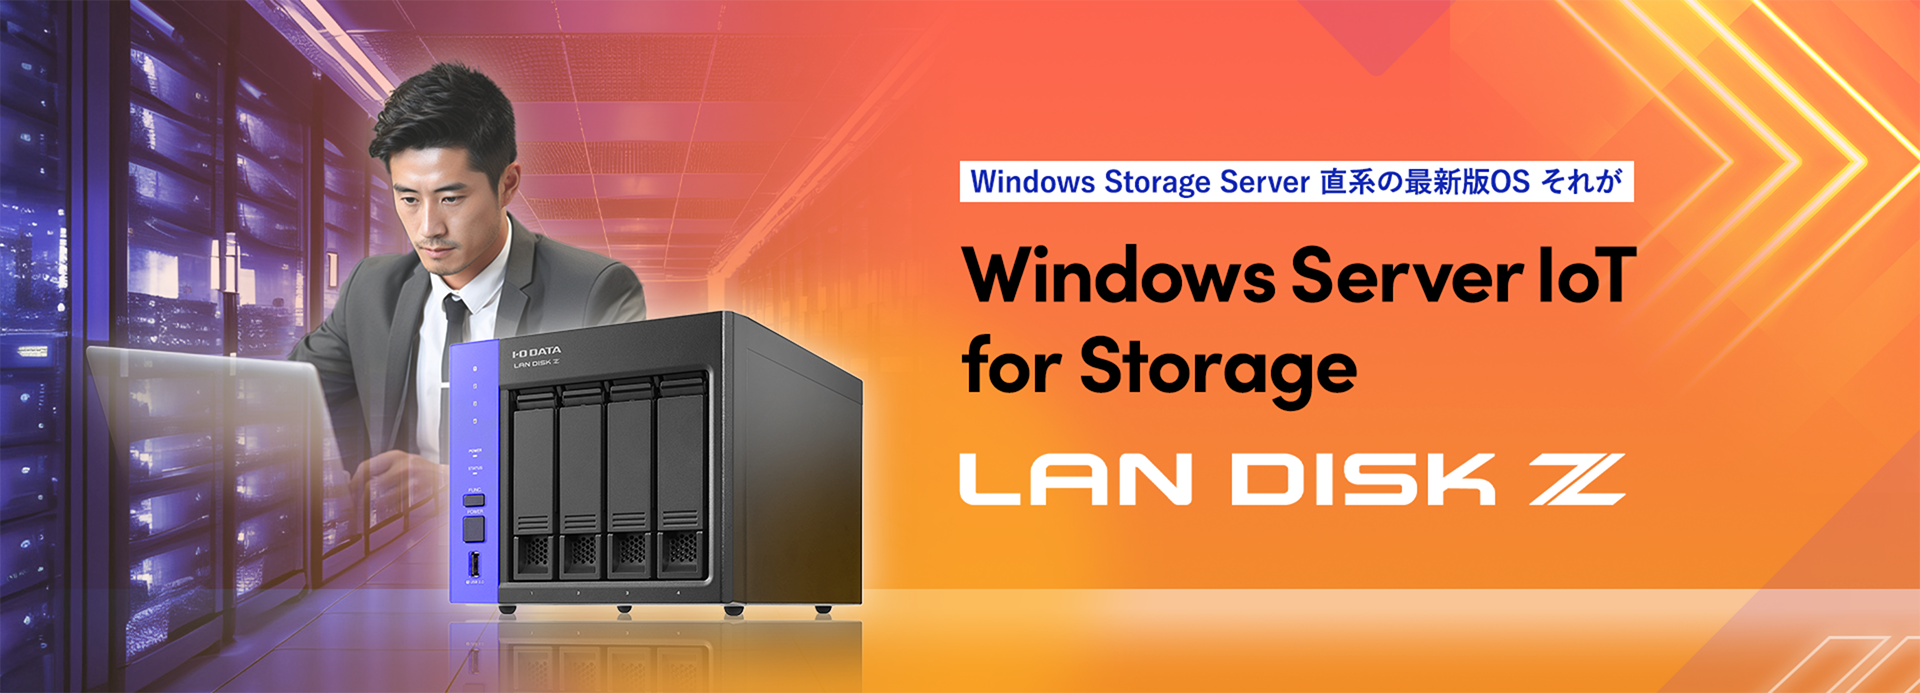 Windows Storage Server 直系の最新版OS それがWindows Server IoT for Storage